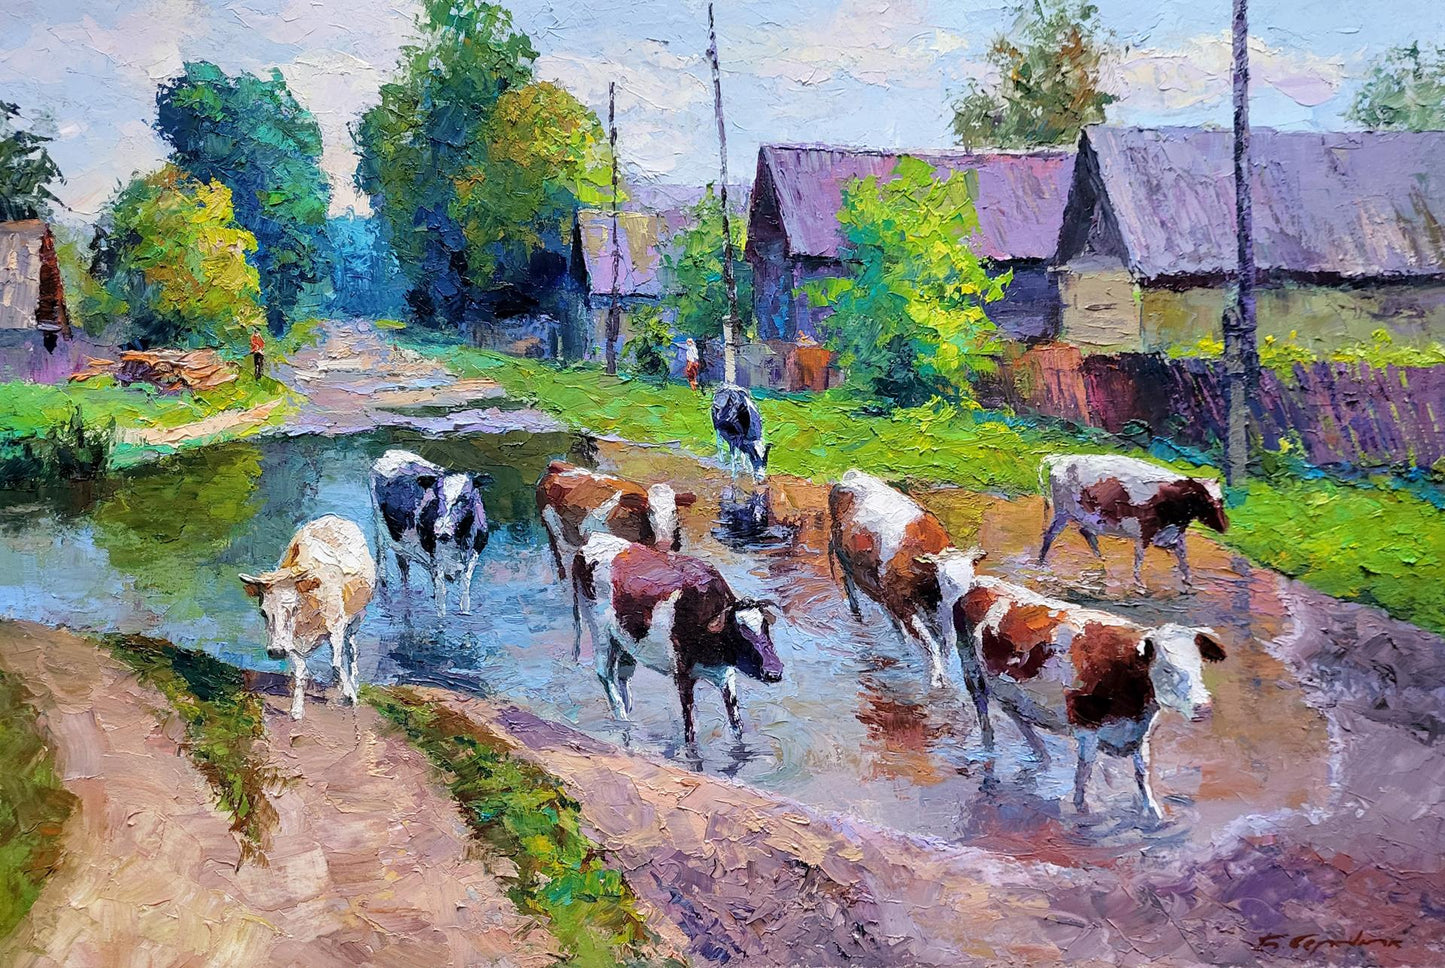 Oil painting Summer day Boris Serdyuk